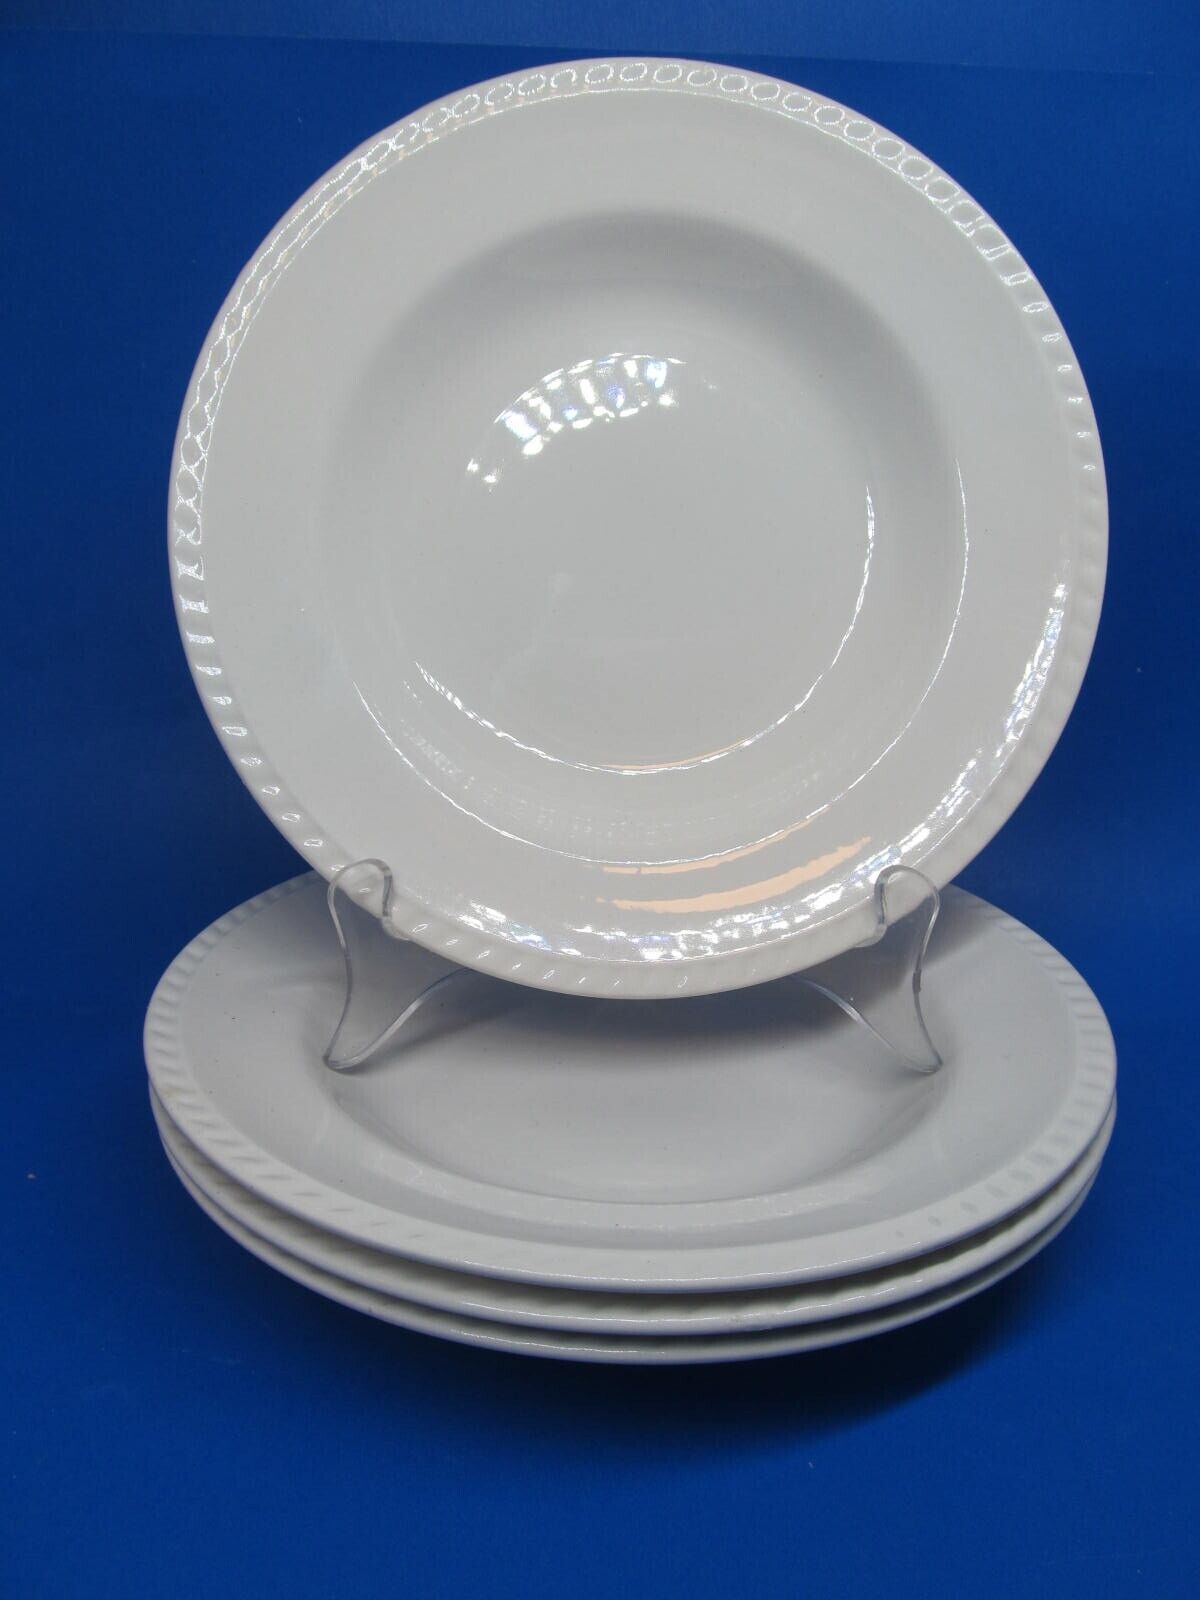 Primary image for Oxford "Lenox" Keradur White Rope Trim 8 5/8" Salad Plates Set Of 4 Plates VGC